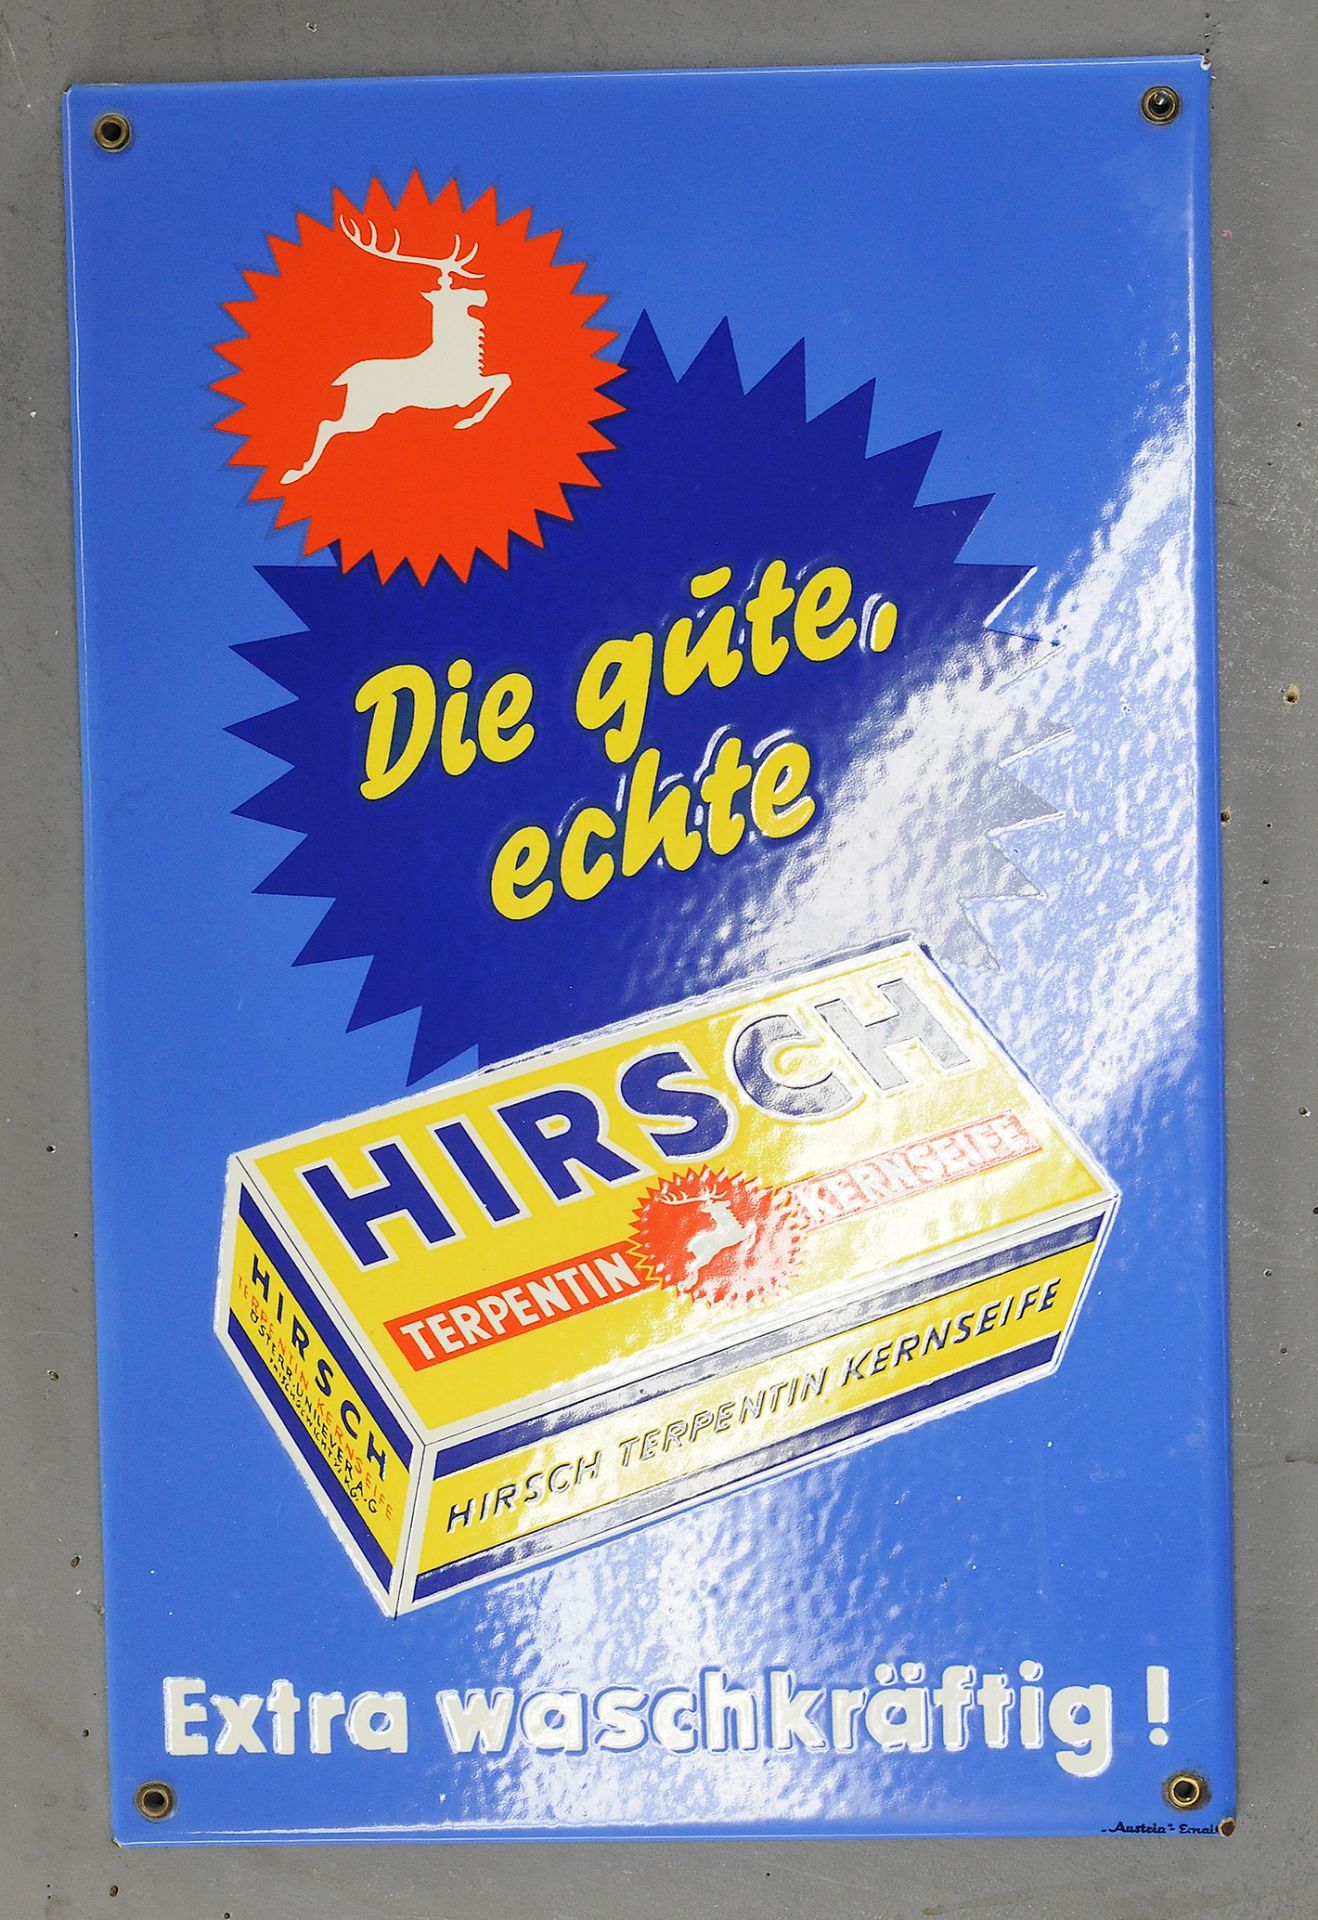 Hirsch Seife - Image 3 of 3